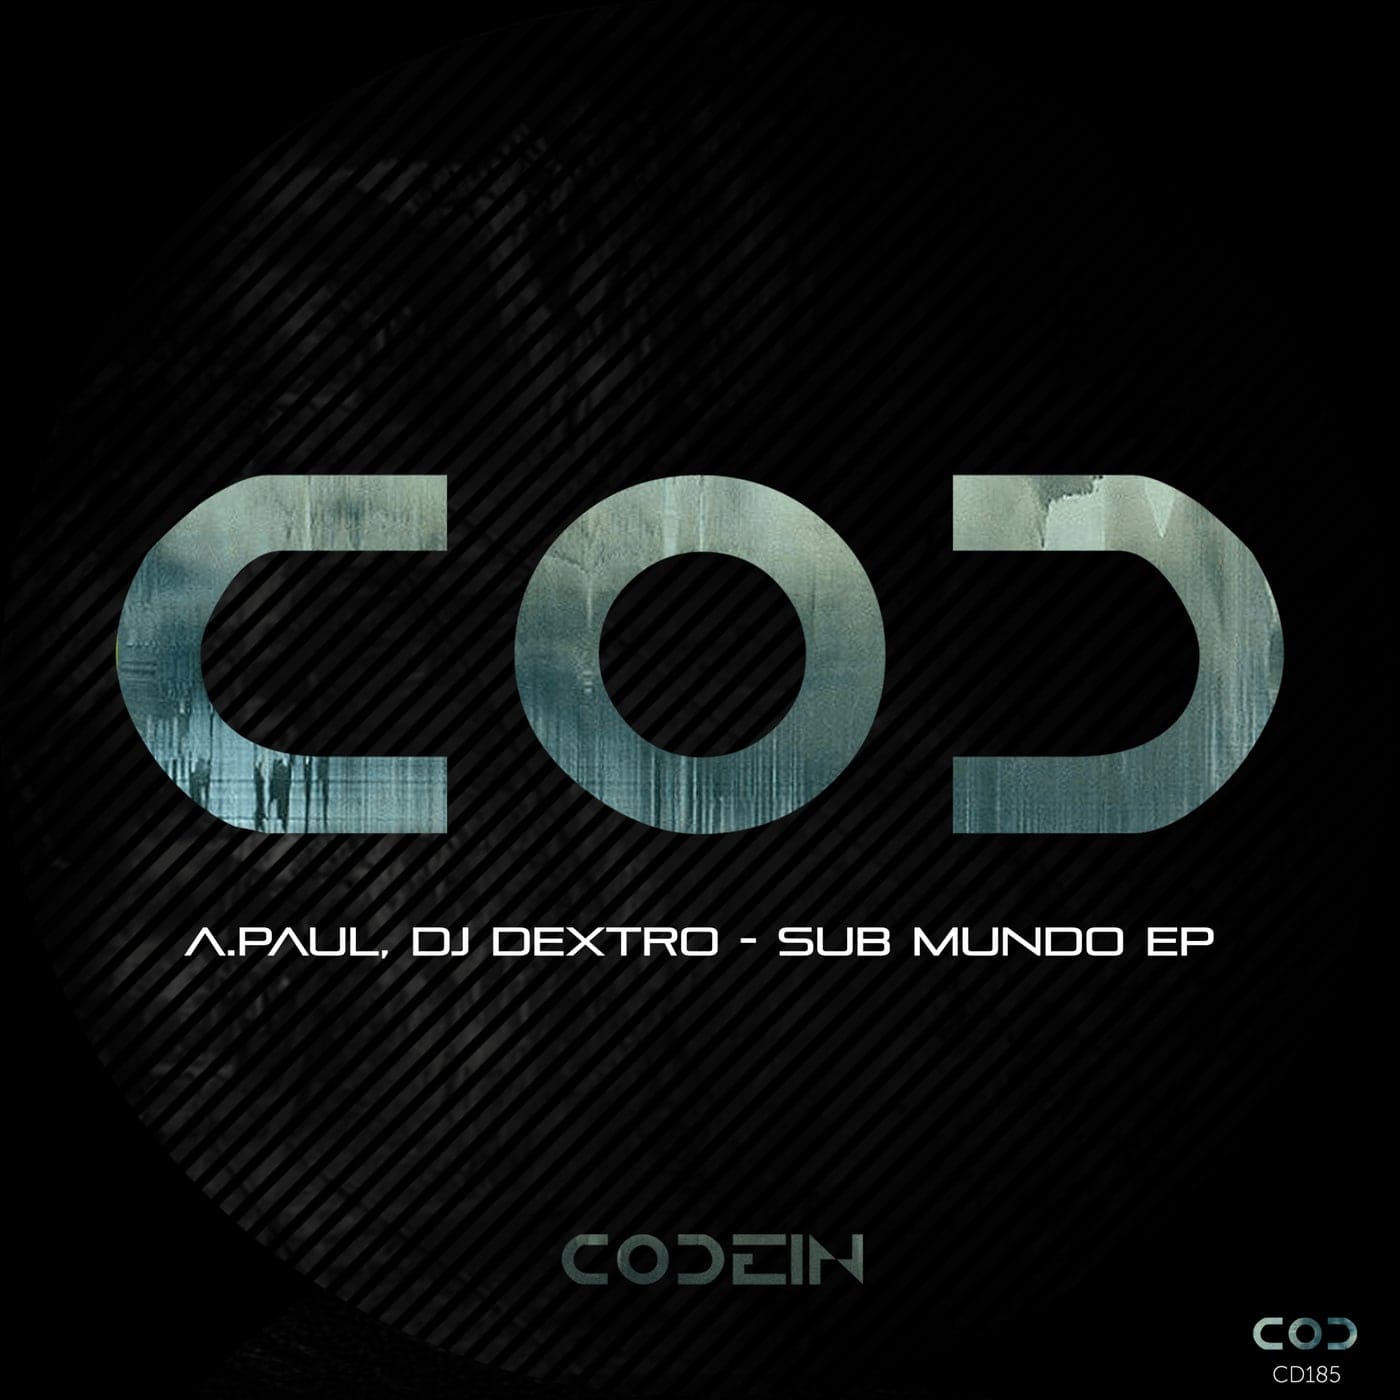 image cover: Sub Mundo EP by A.Paul, DJ Dextro on Codein Music